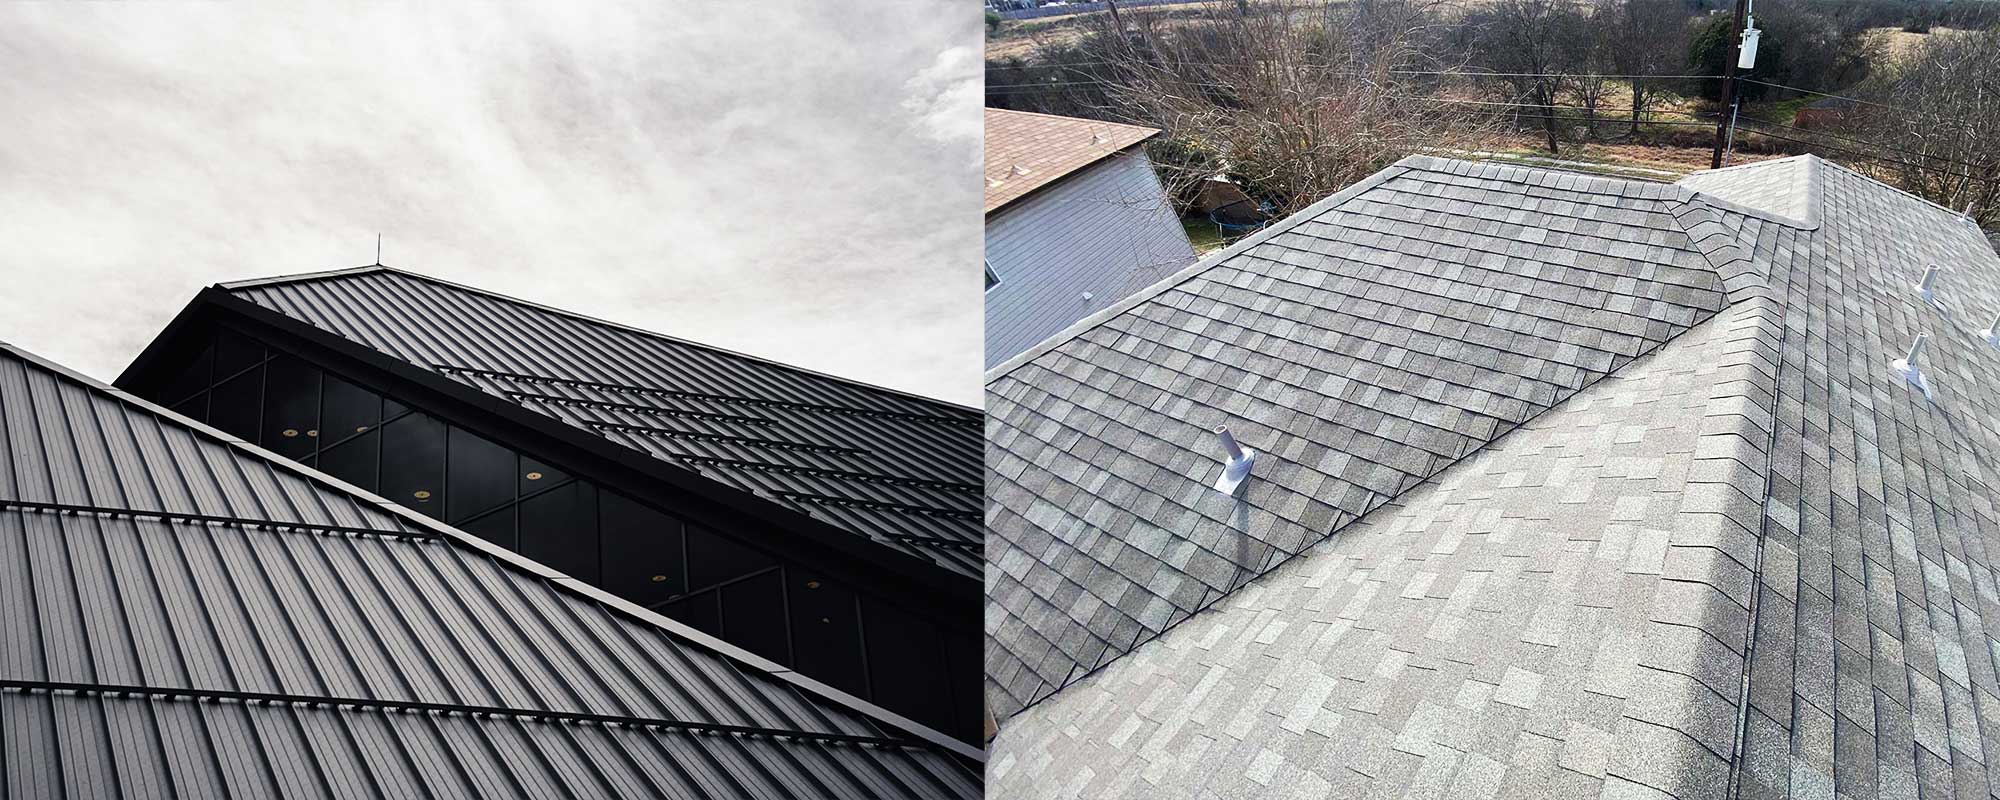 metal vs shingle roofing comparison